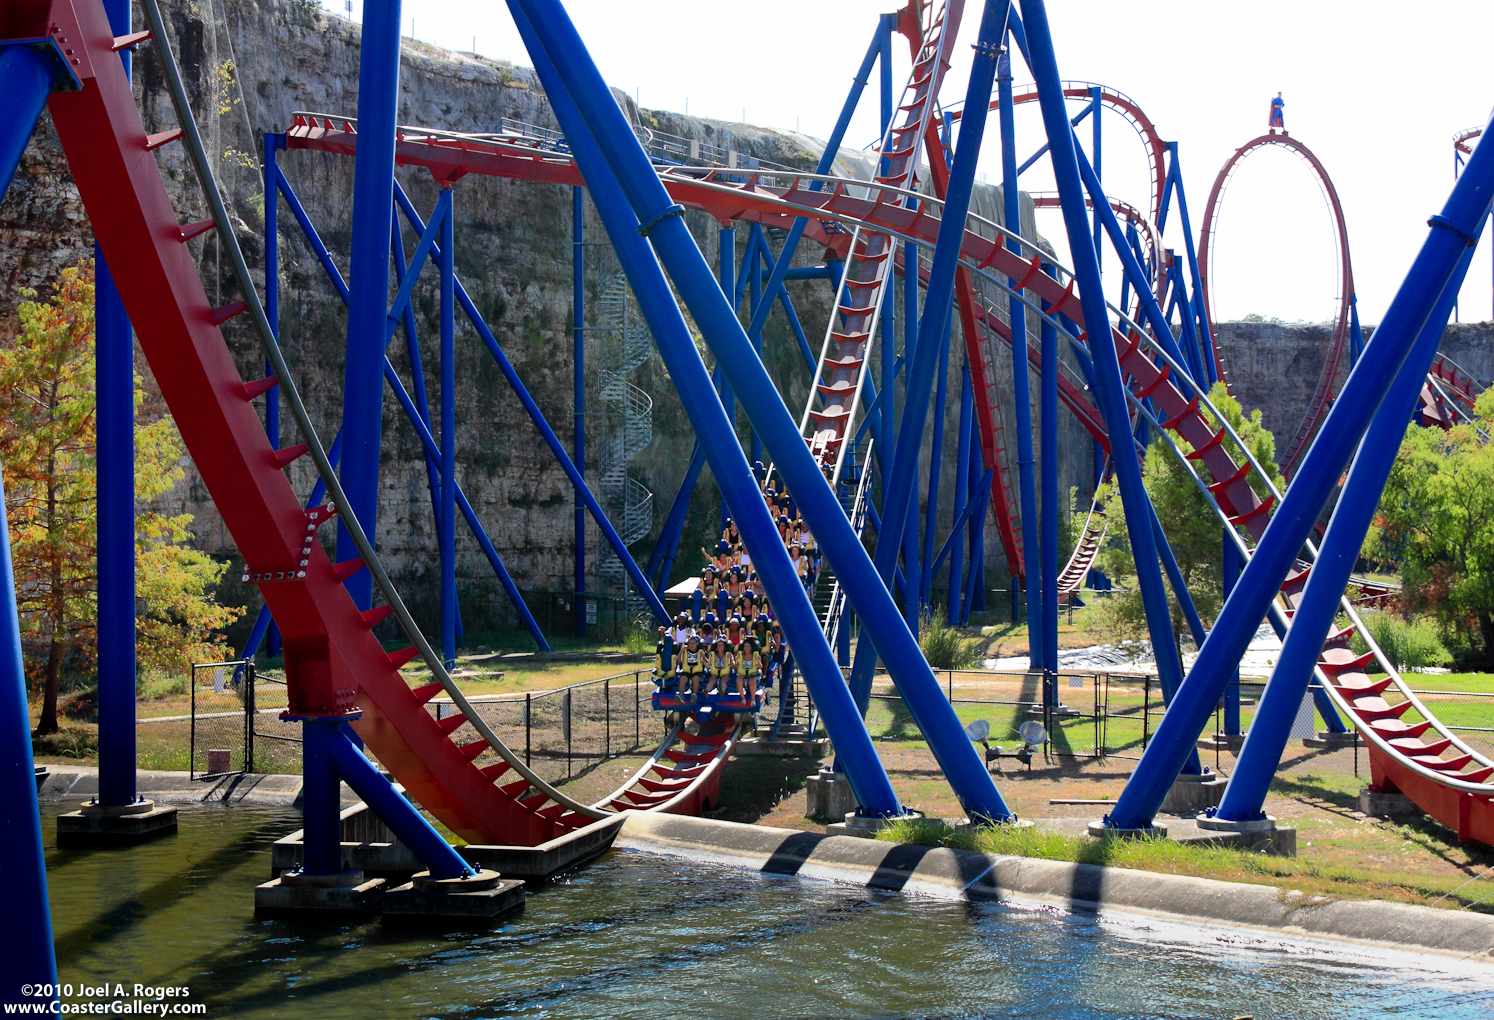 A roller coaster going through the water.